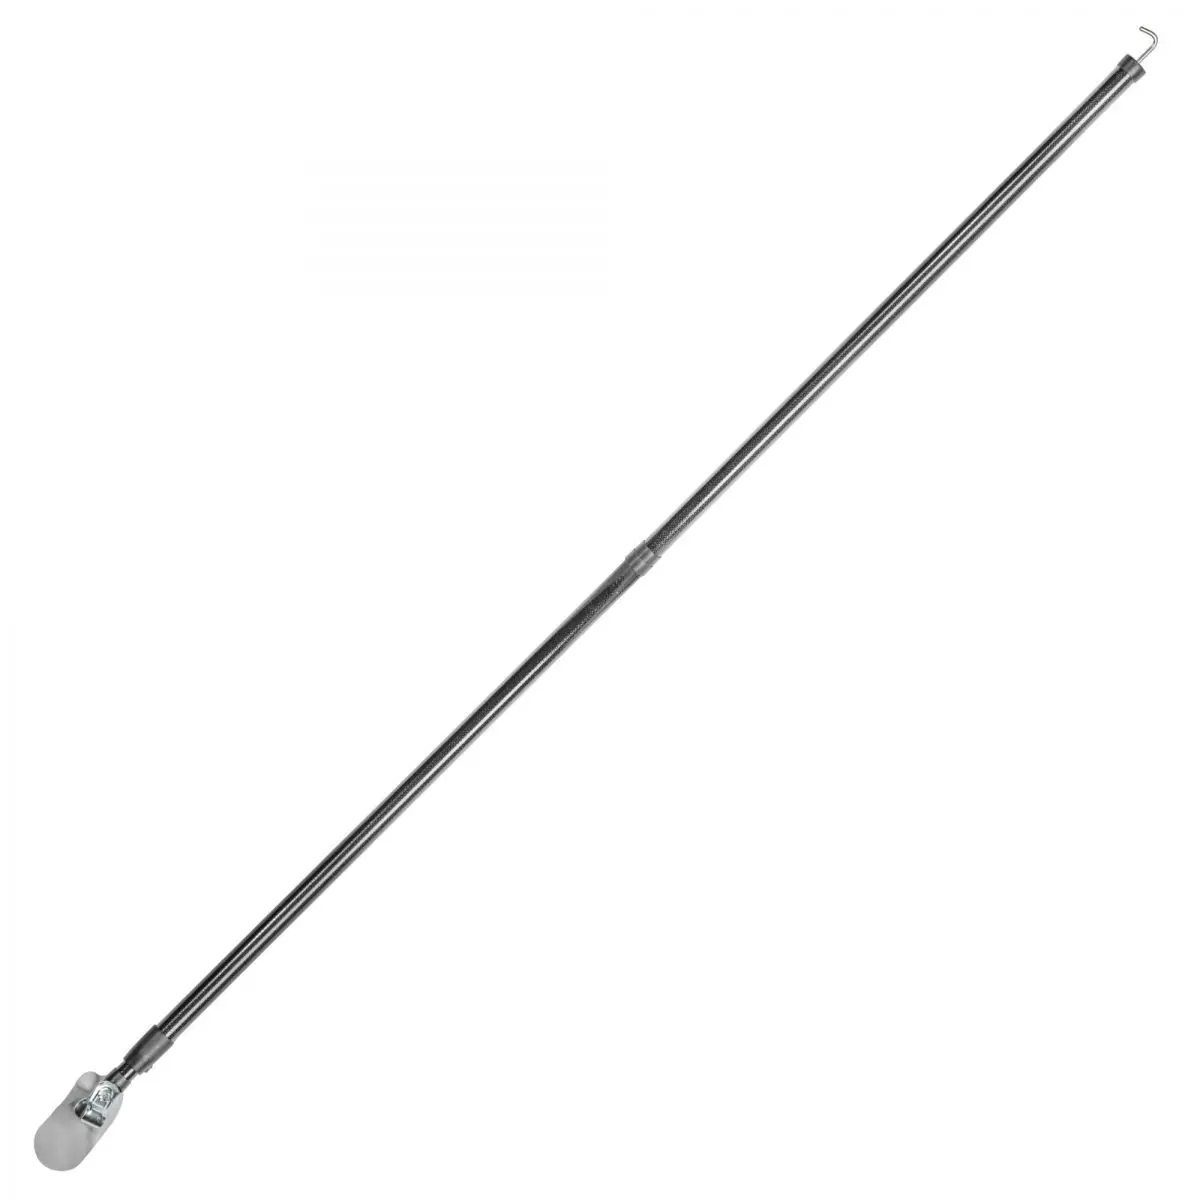 Strešná tyč FTP, 250-280 cm